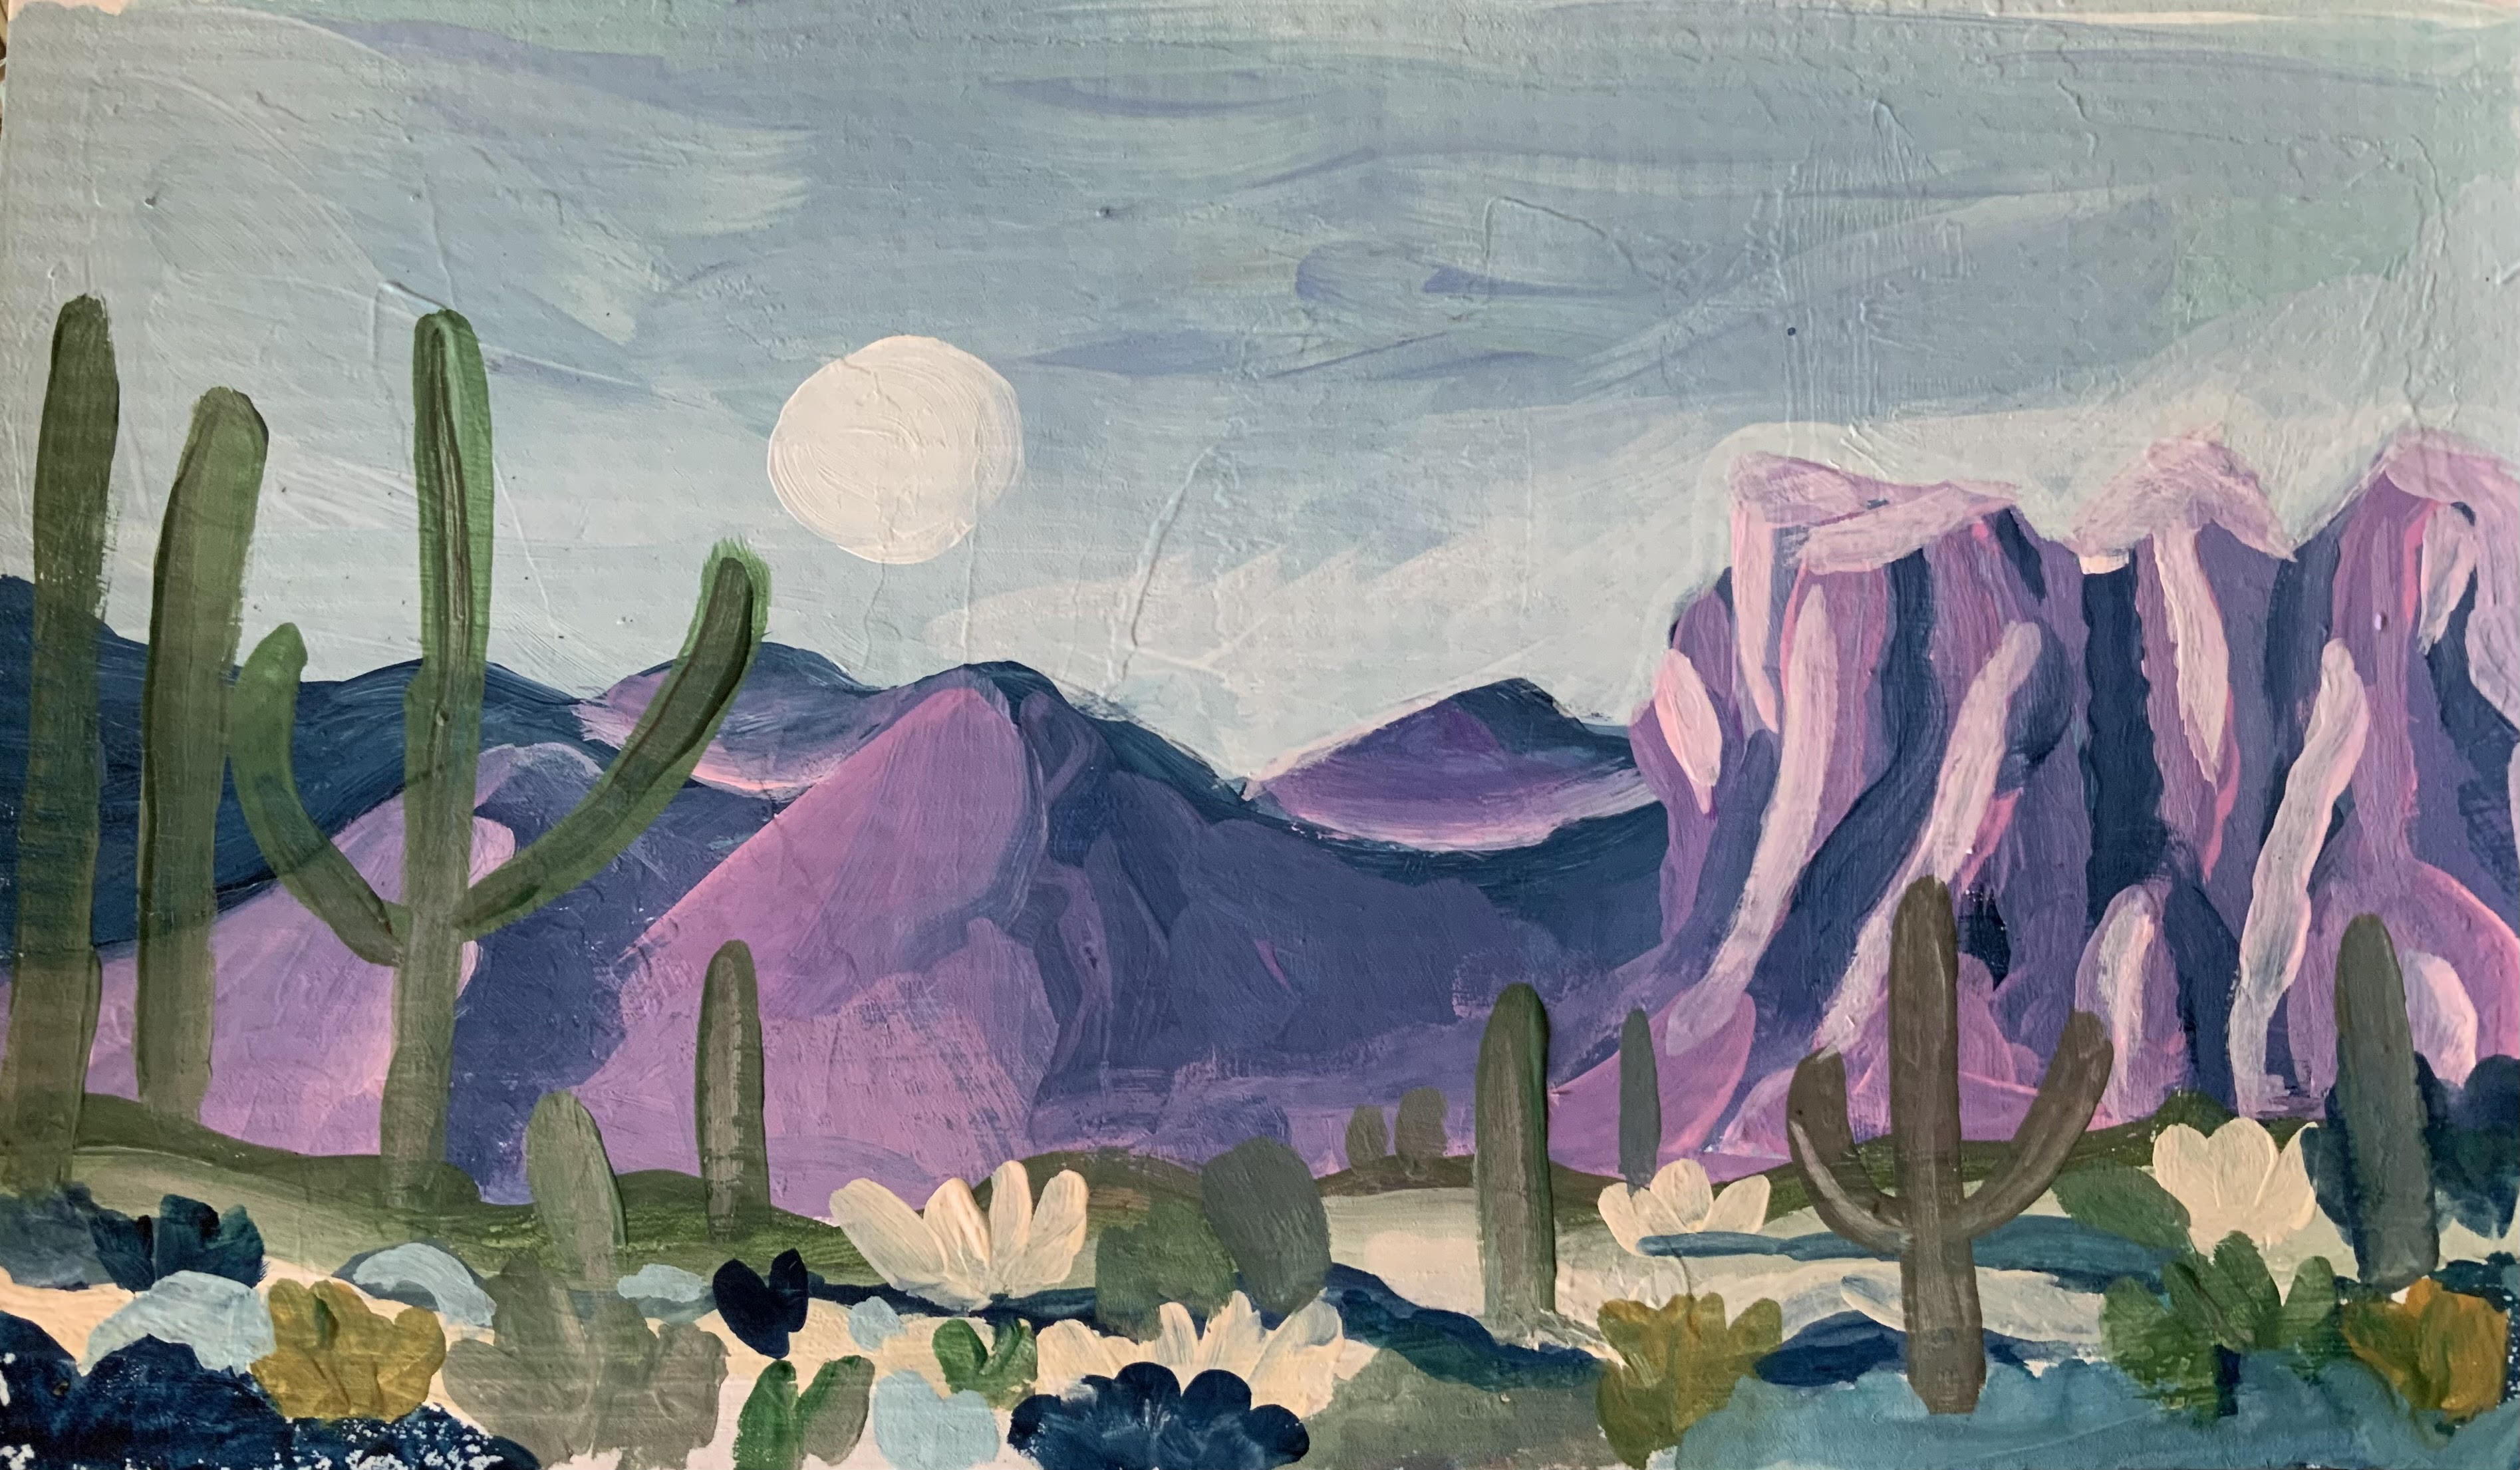 Desert scene painted with gouache